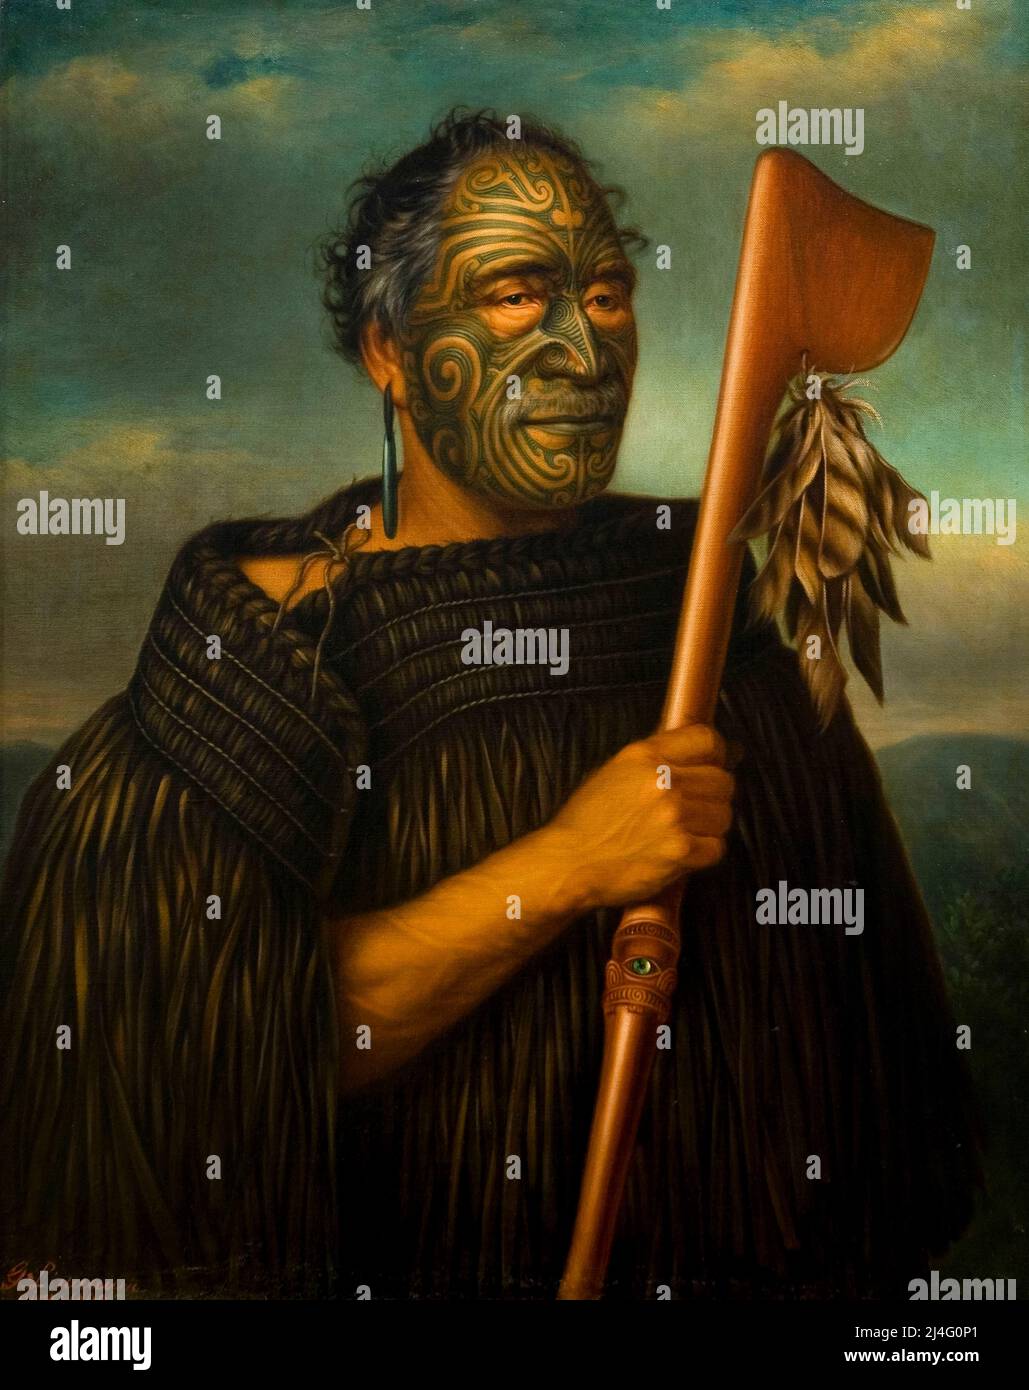 Tamati Waka Nene (1780s-1871) Māori chief of the Ngāpuhi iwi tribe, portrait by New Zealand artist Gottfried Lindauer (1839-1926) painted in 1890. Stock Photo